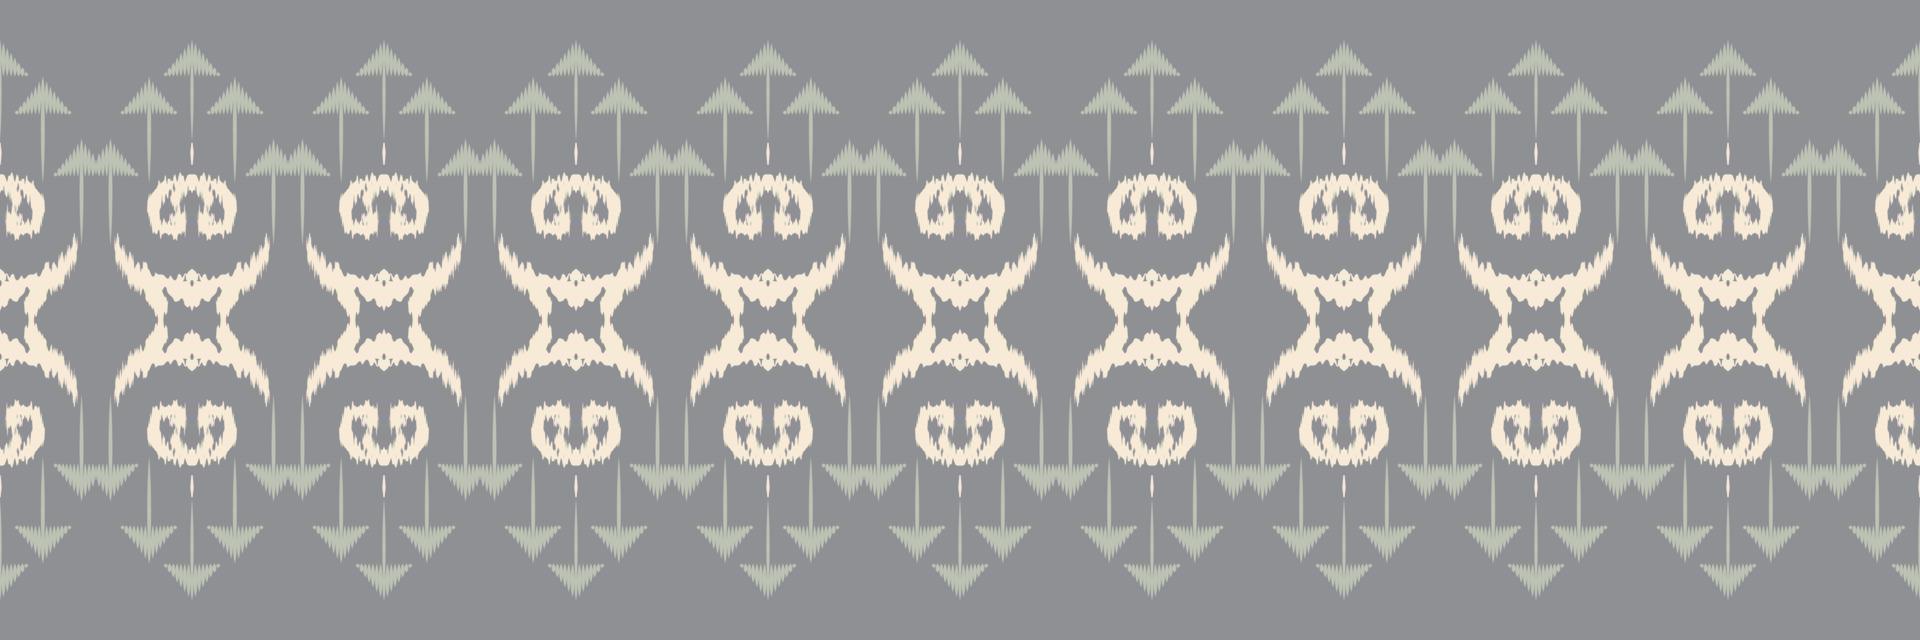 patrón de ikat arte tribal de patrones sin fisuras. étnico geométrico ikkat batik vector digital diseño textil para estampados tela sari mughal cepillo símbolo franjas textura kurti kurtis kurtas